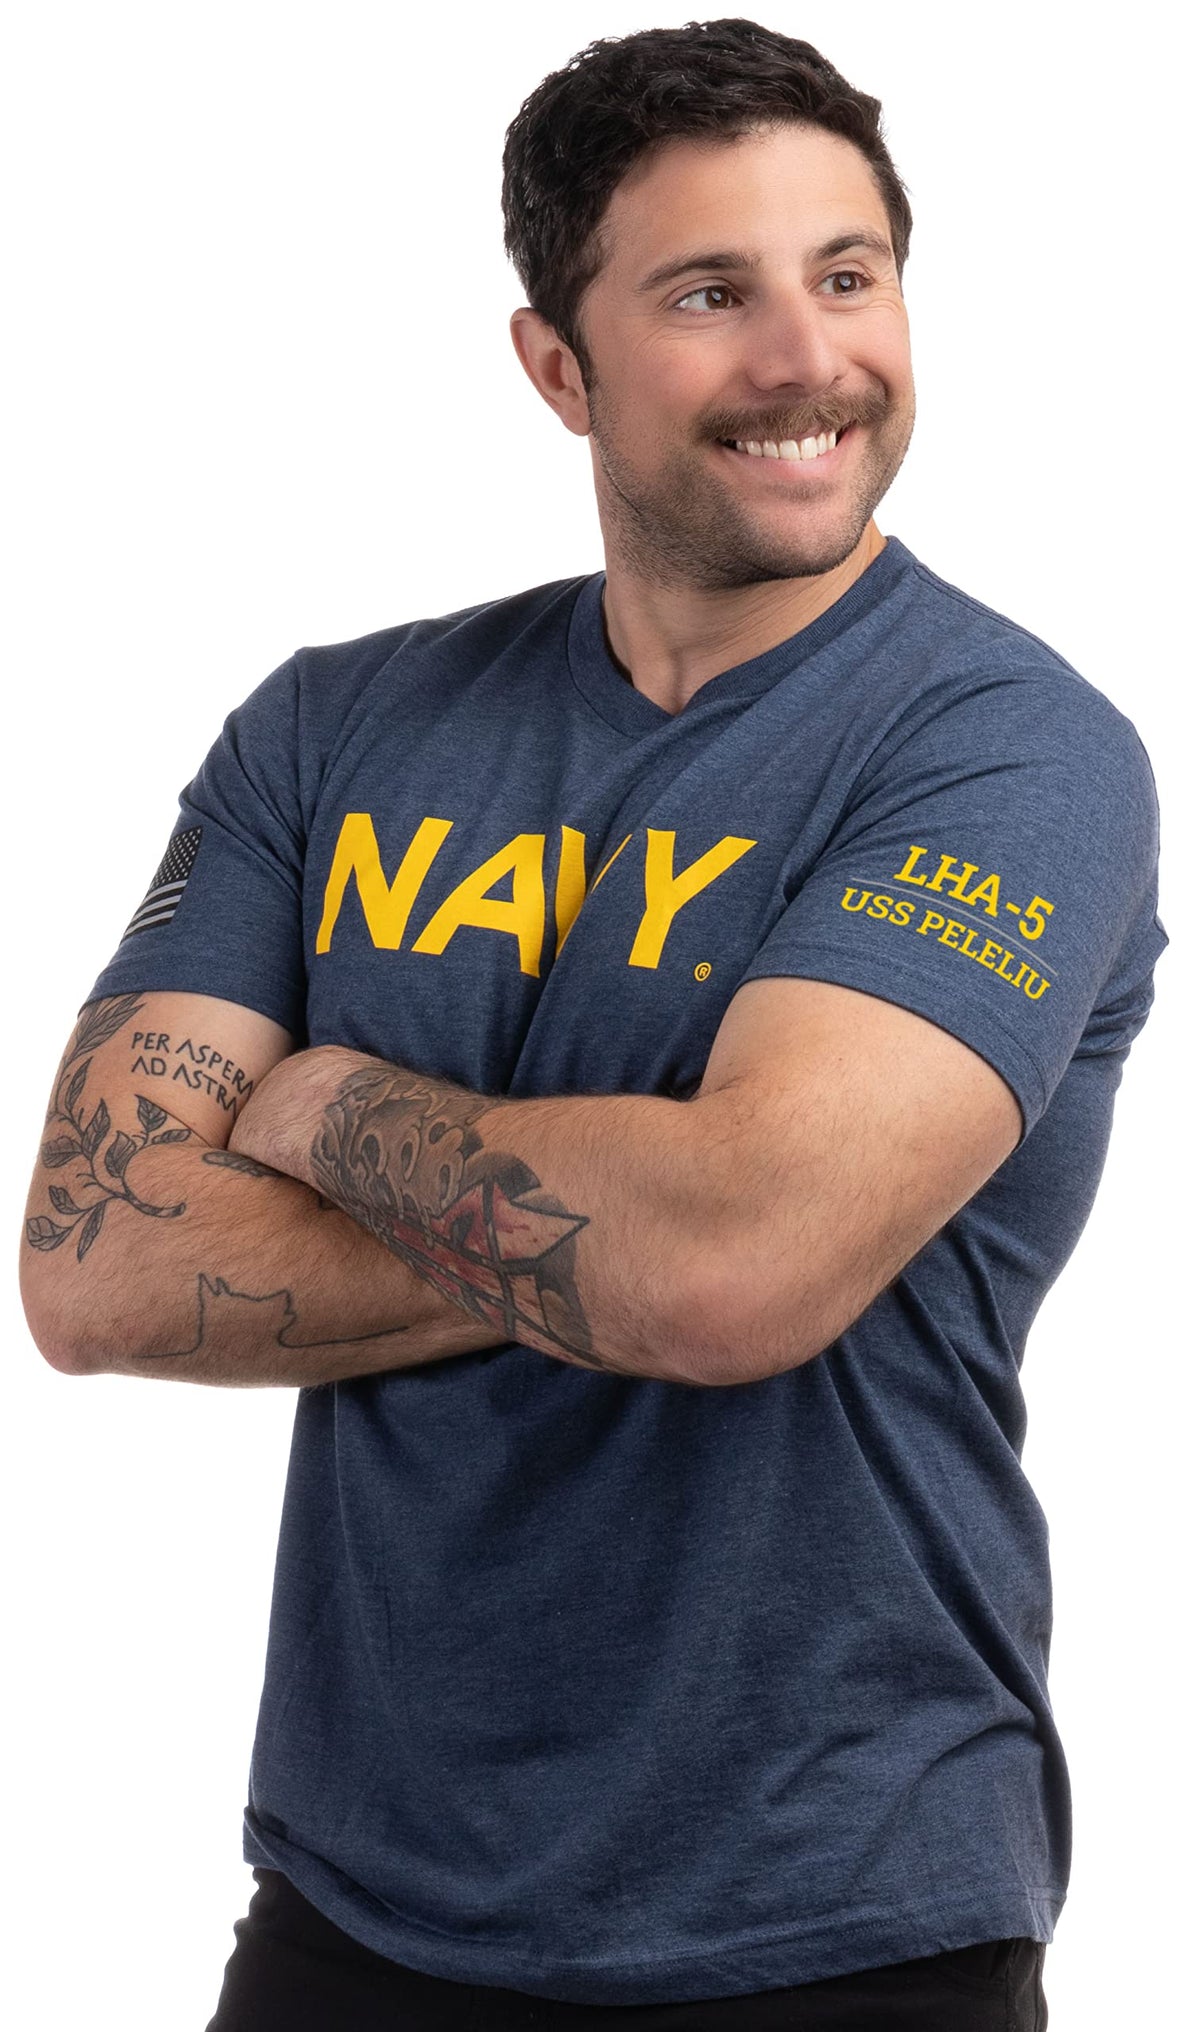 USS Peleliu, LHA-5 | U.S. Navy Sailor Veteran USN United States Naval T-shirt for Men Women